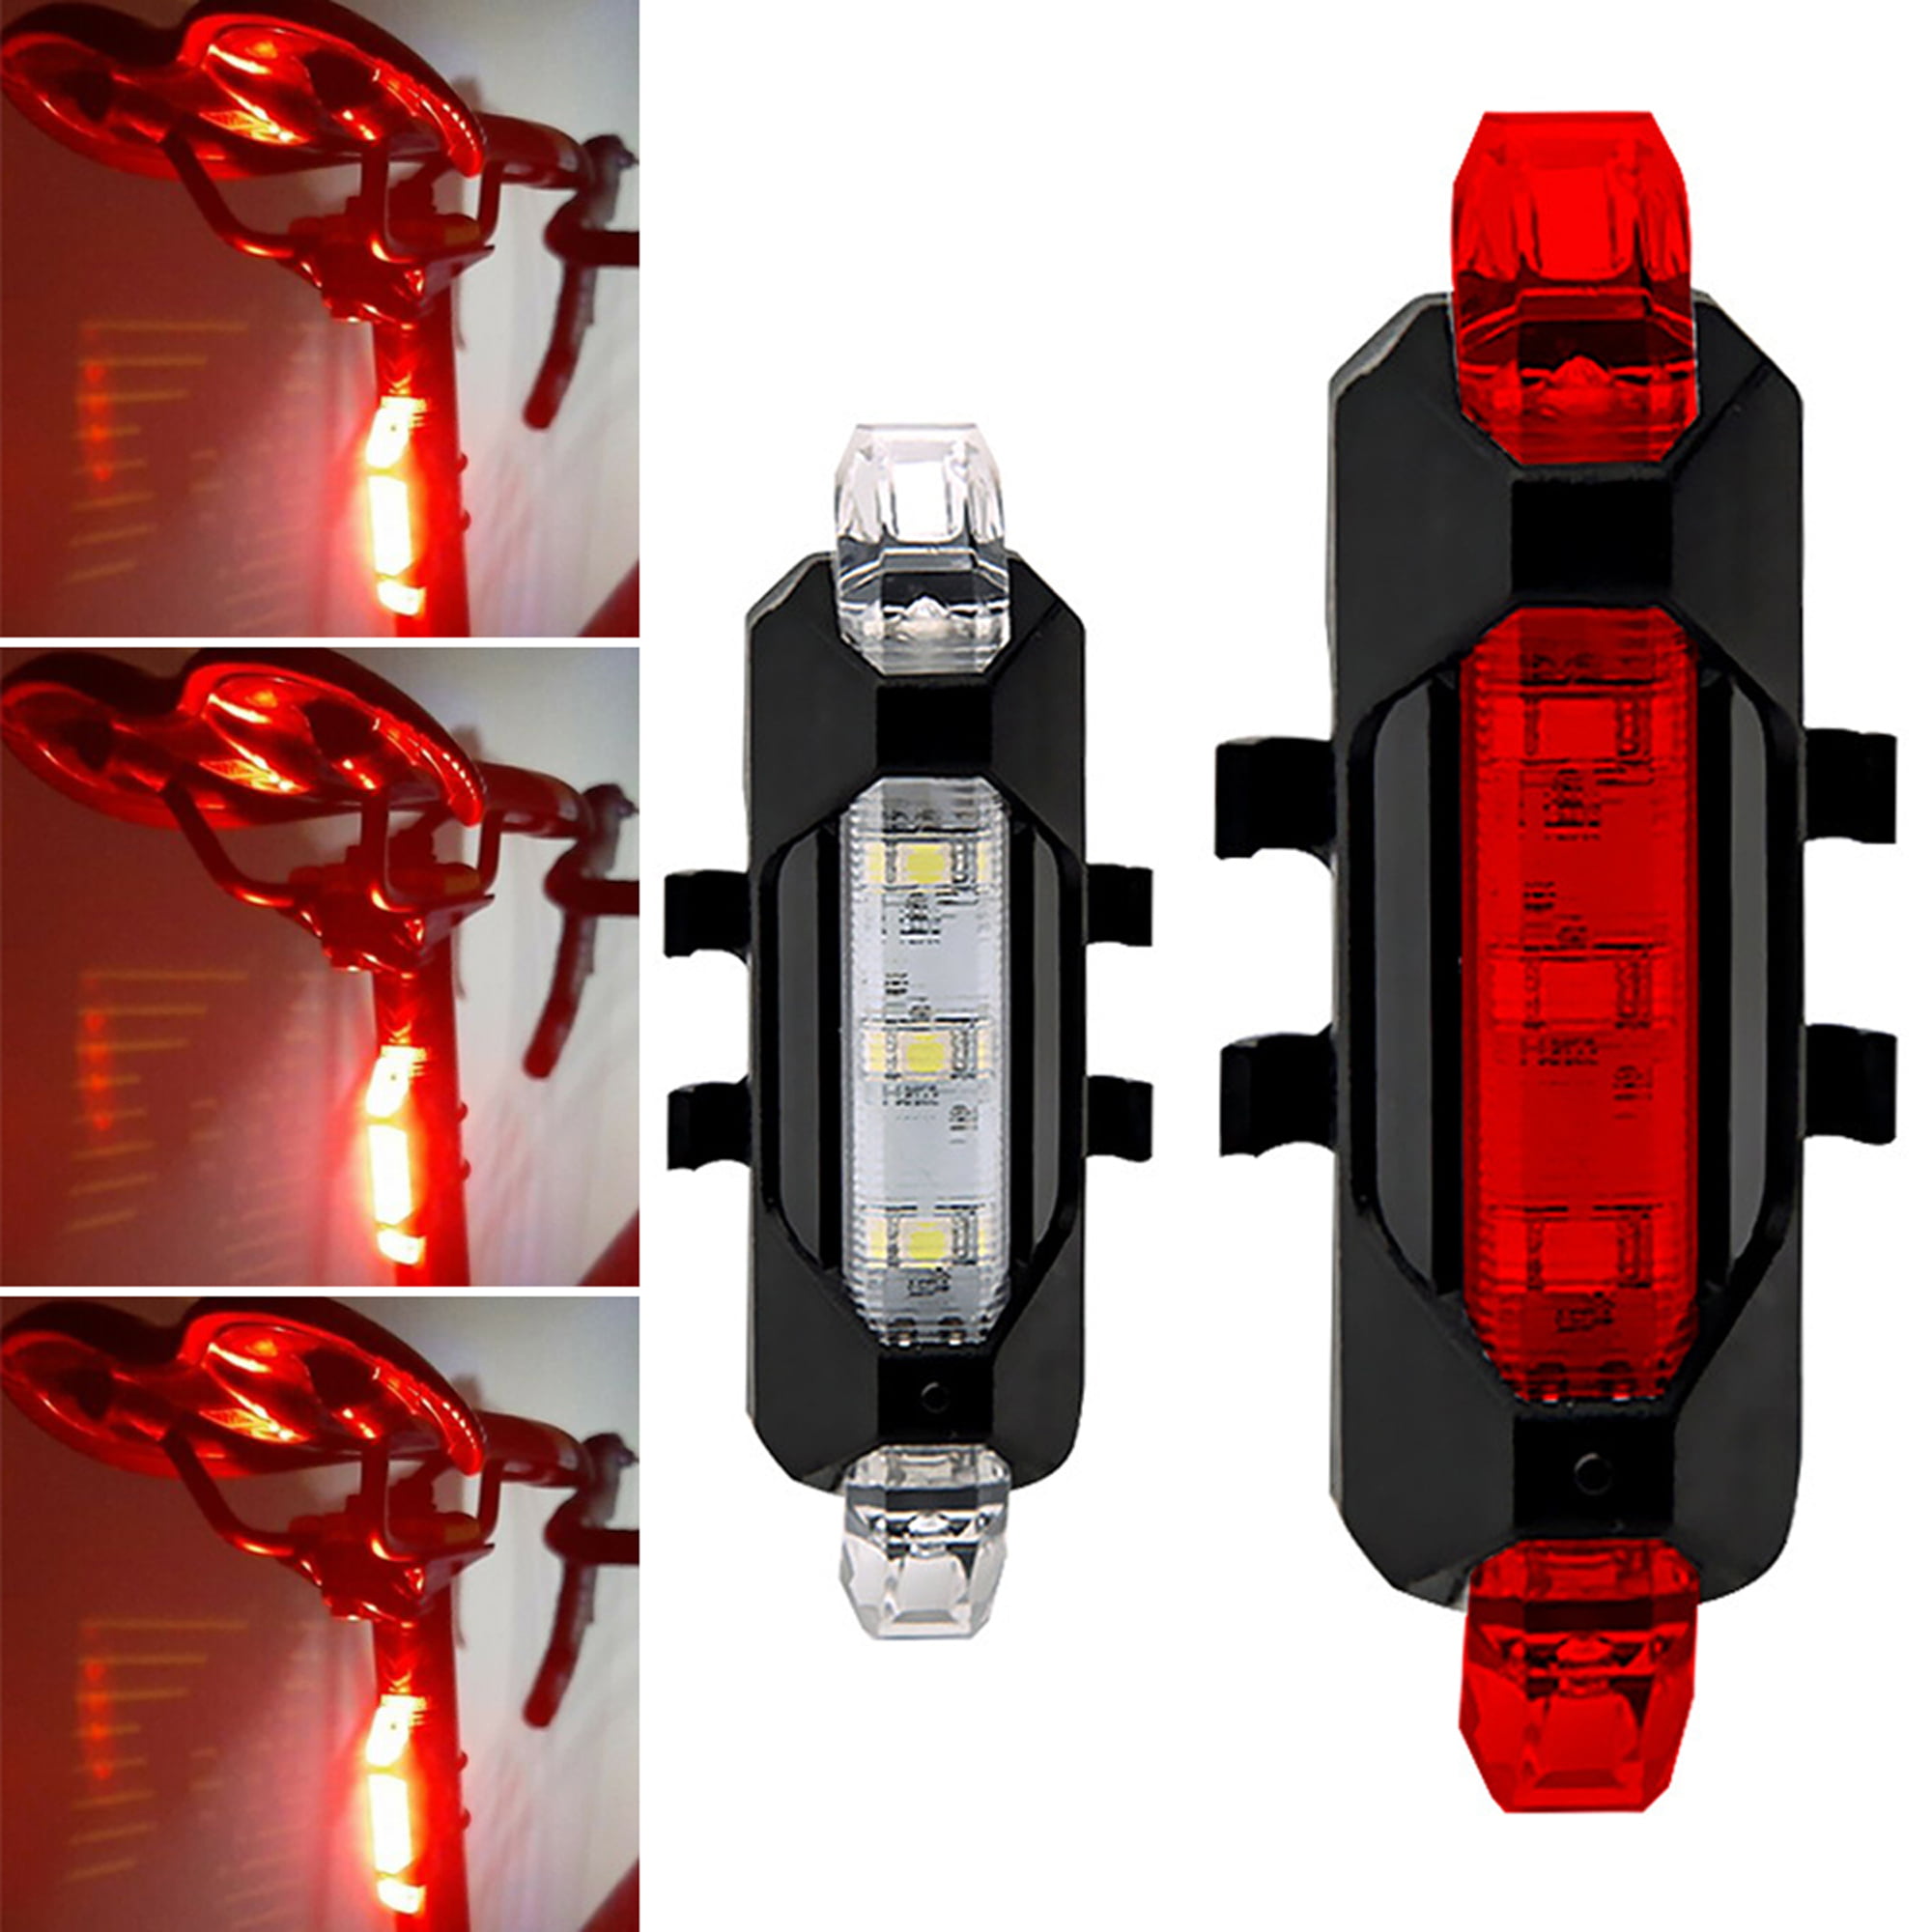 Rear Flashing LED Bike Tail Lamp Taillights Red Beam Light Safety Warning